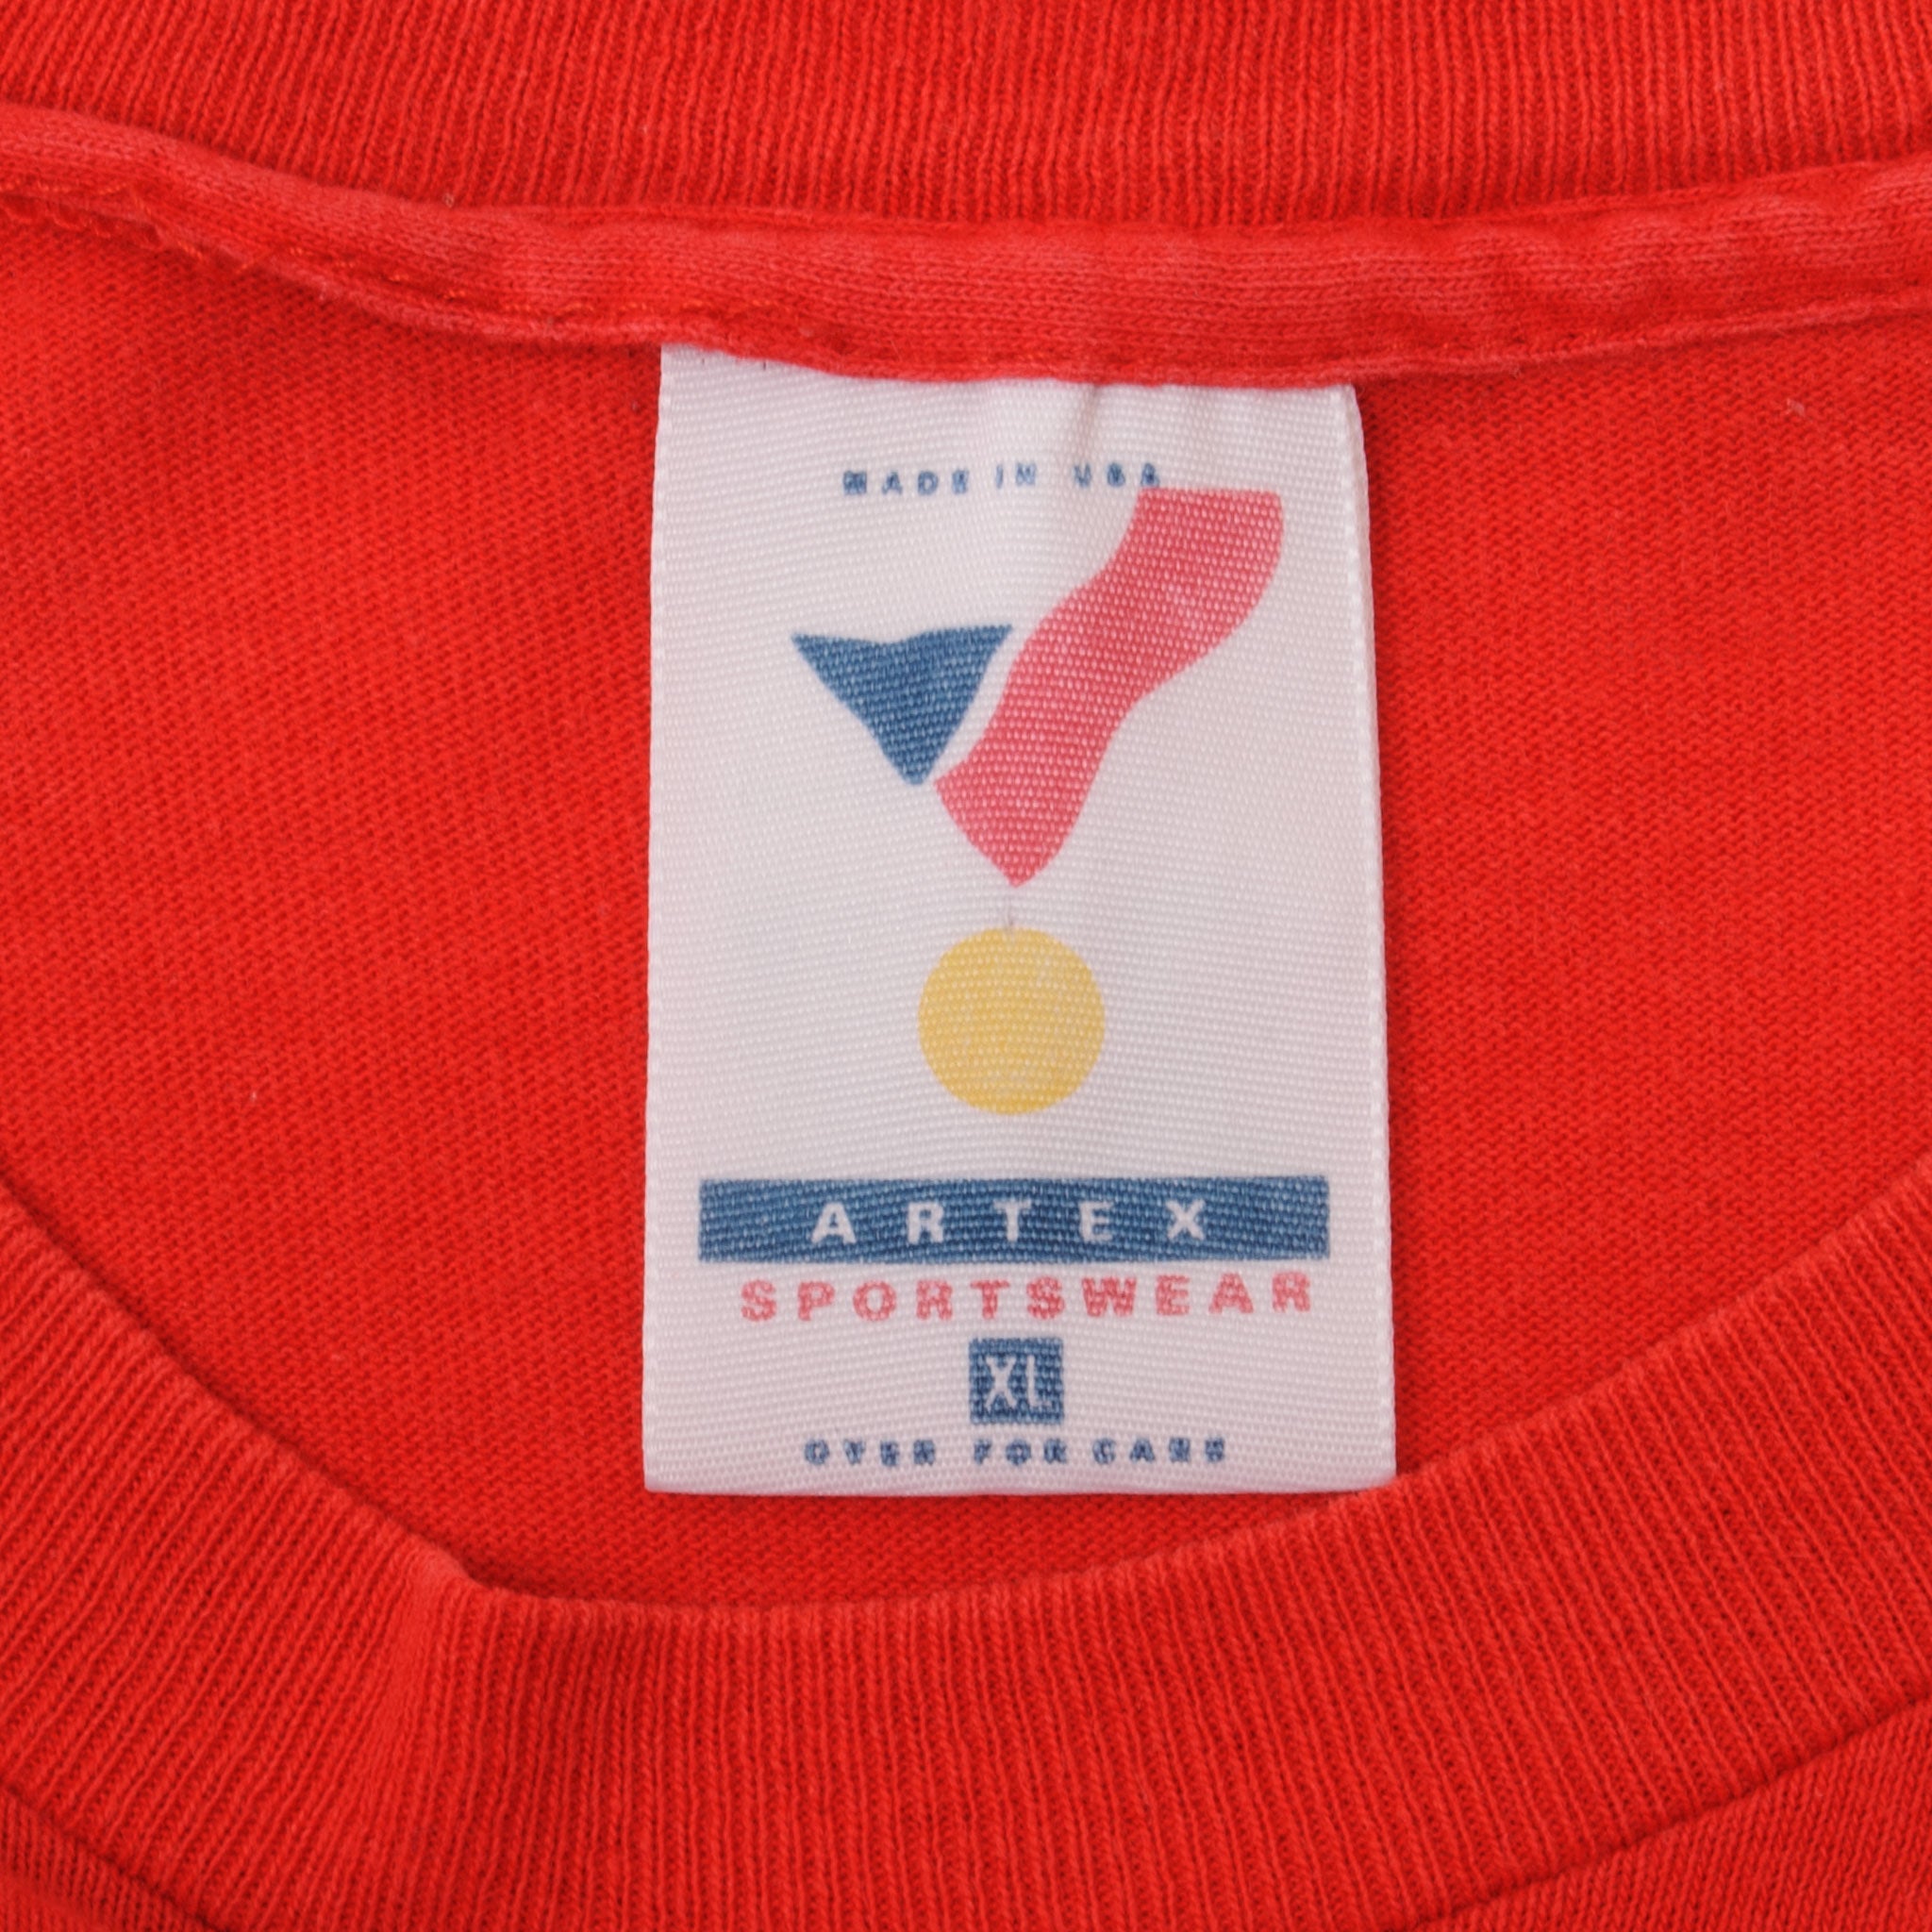 Vintage MLB Philadelphia Phillies Tee Shirt 1993 Size XL Made in USA